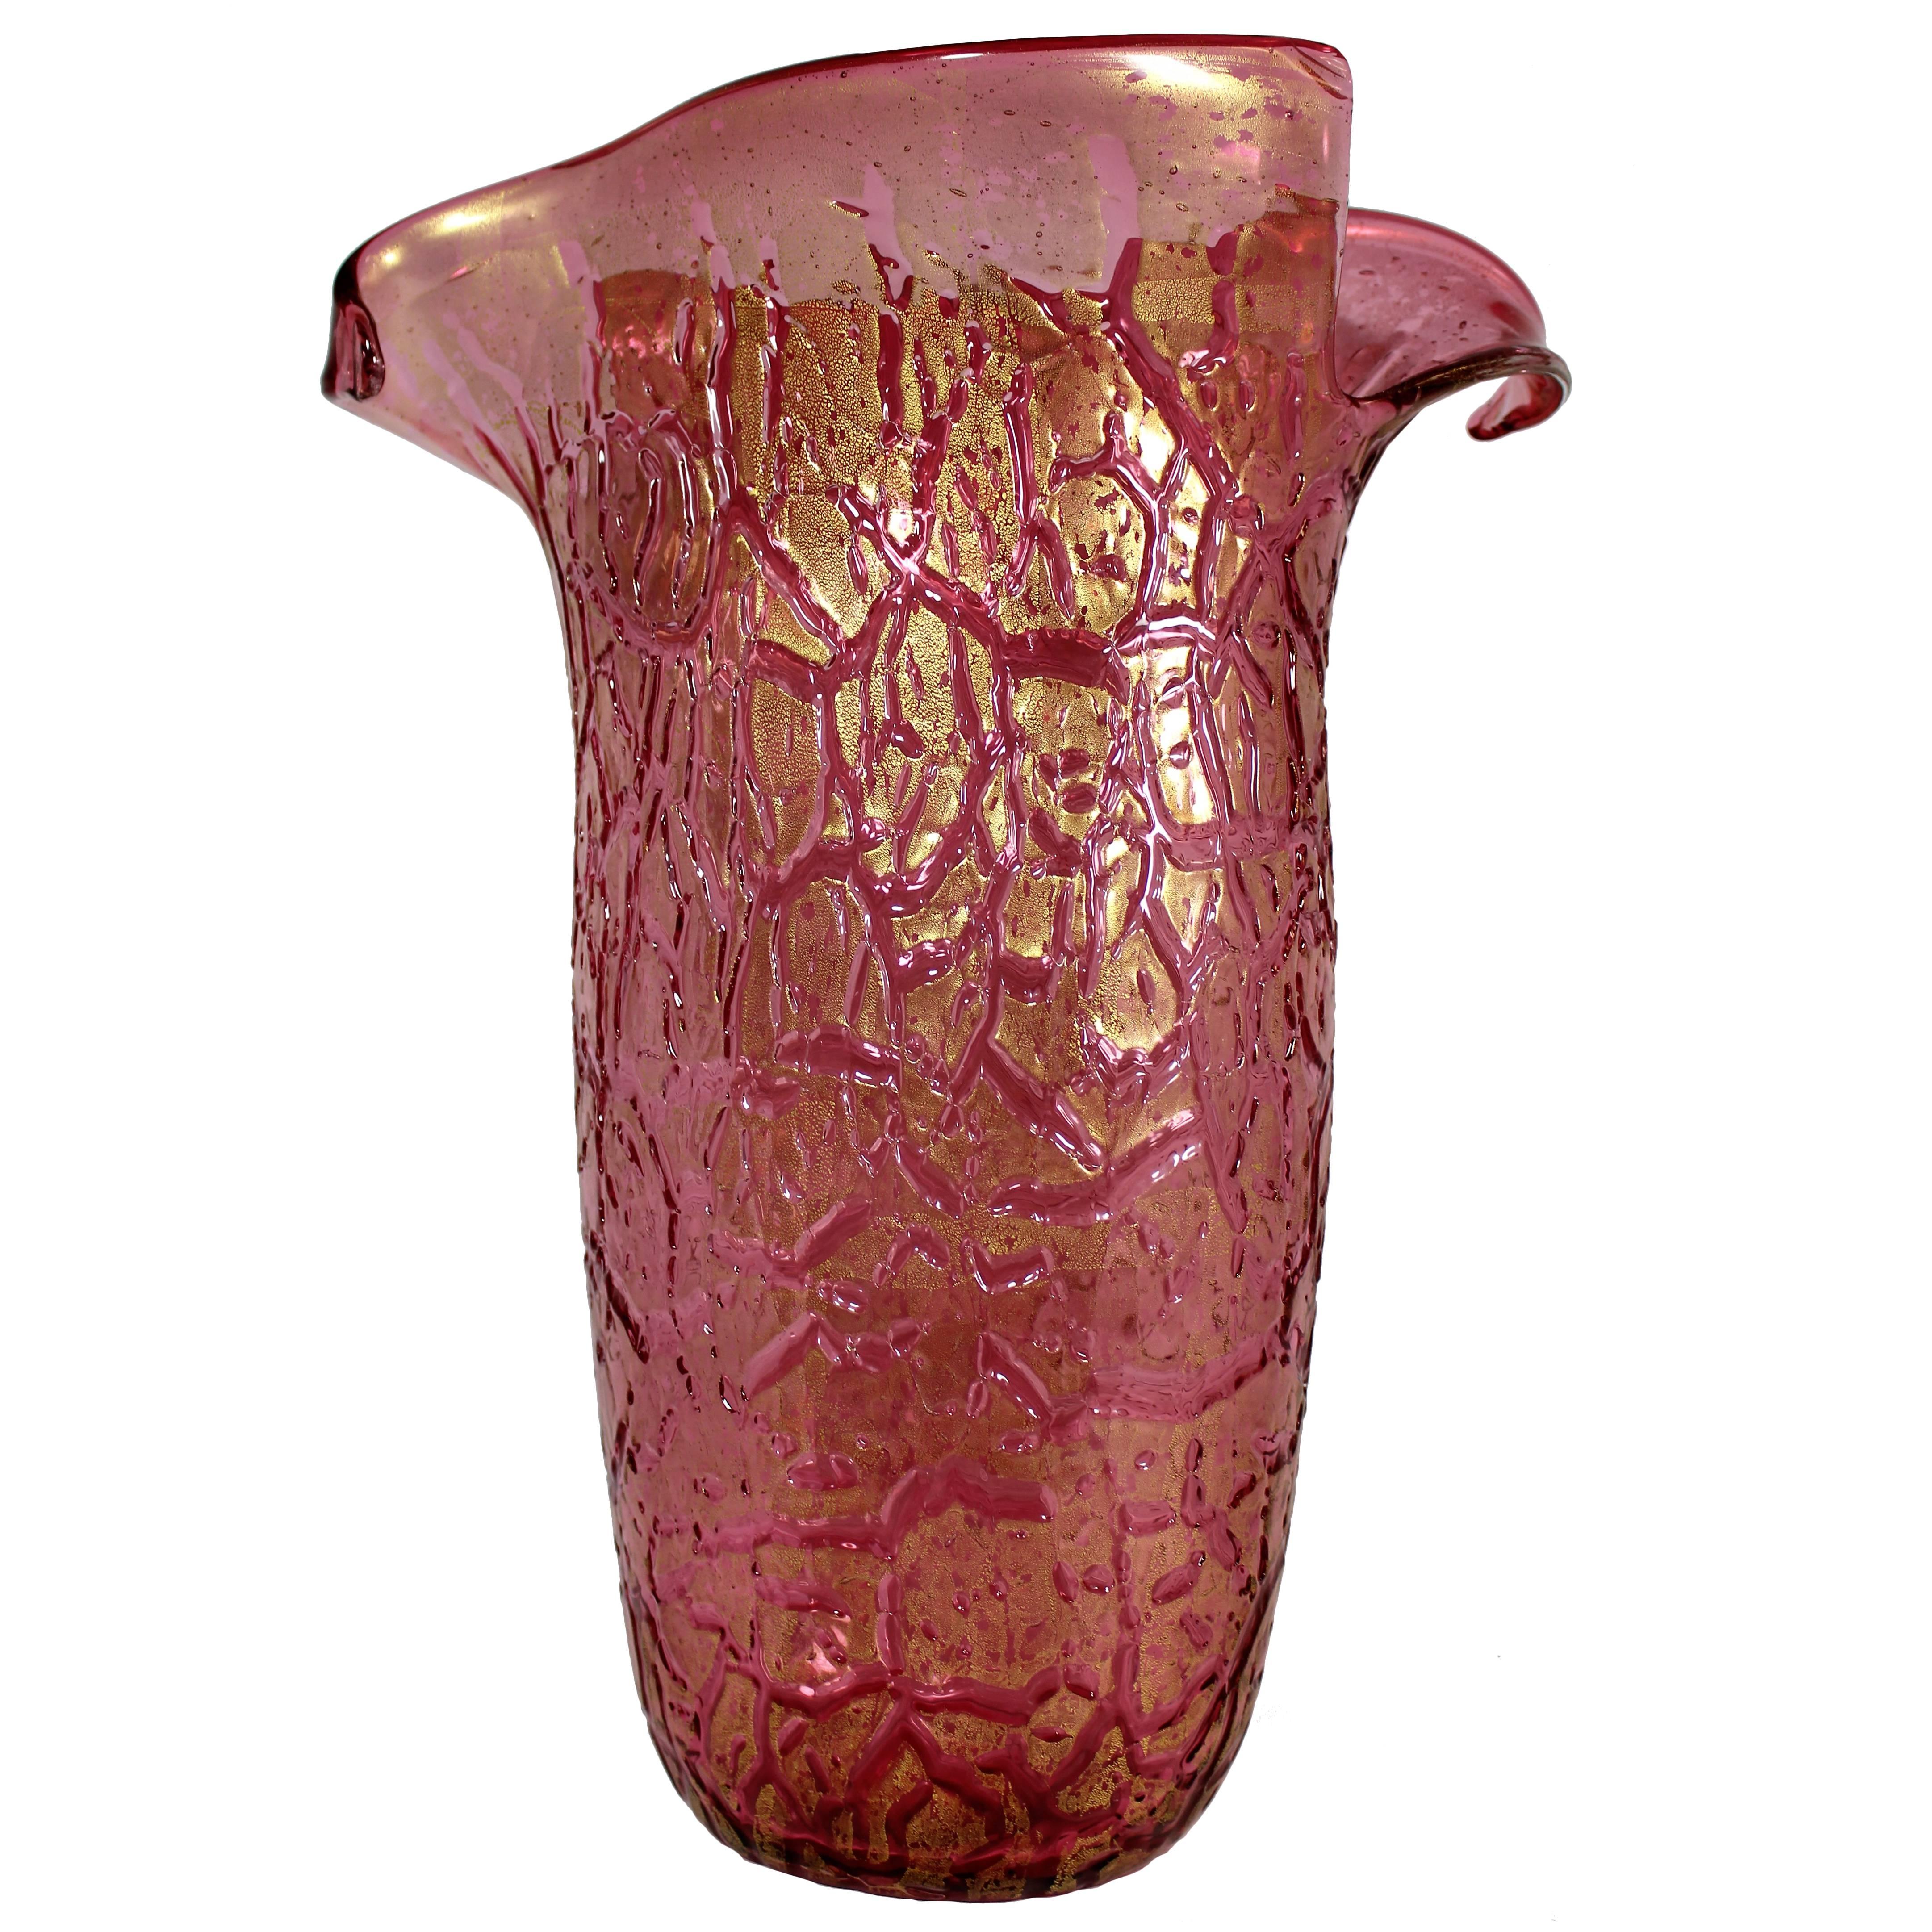 Enrico Camozzo Murano Glass Vase with Gold Flecks